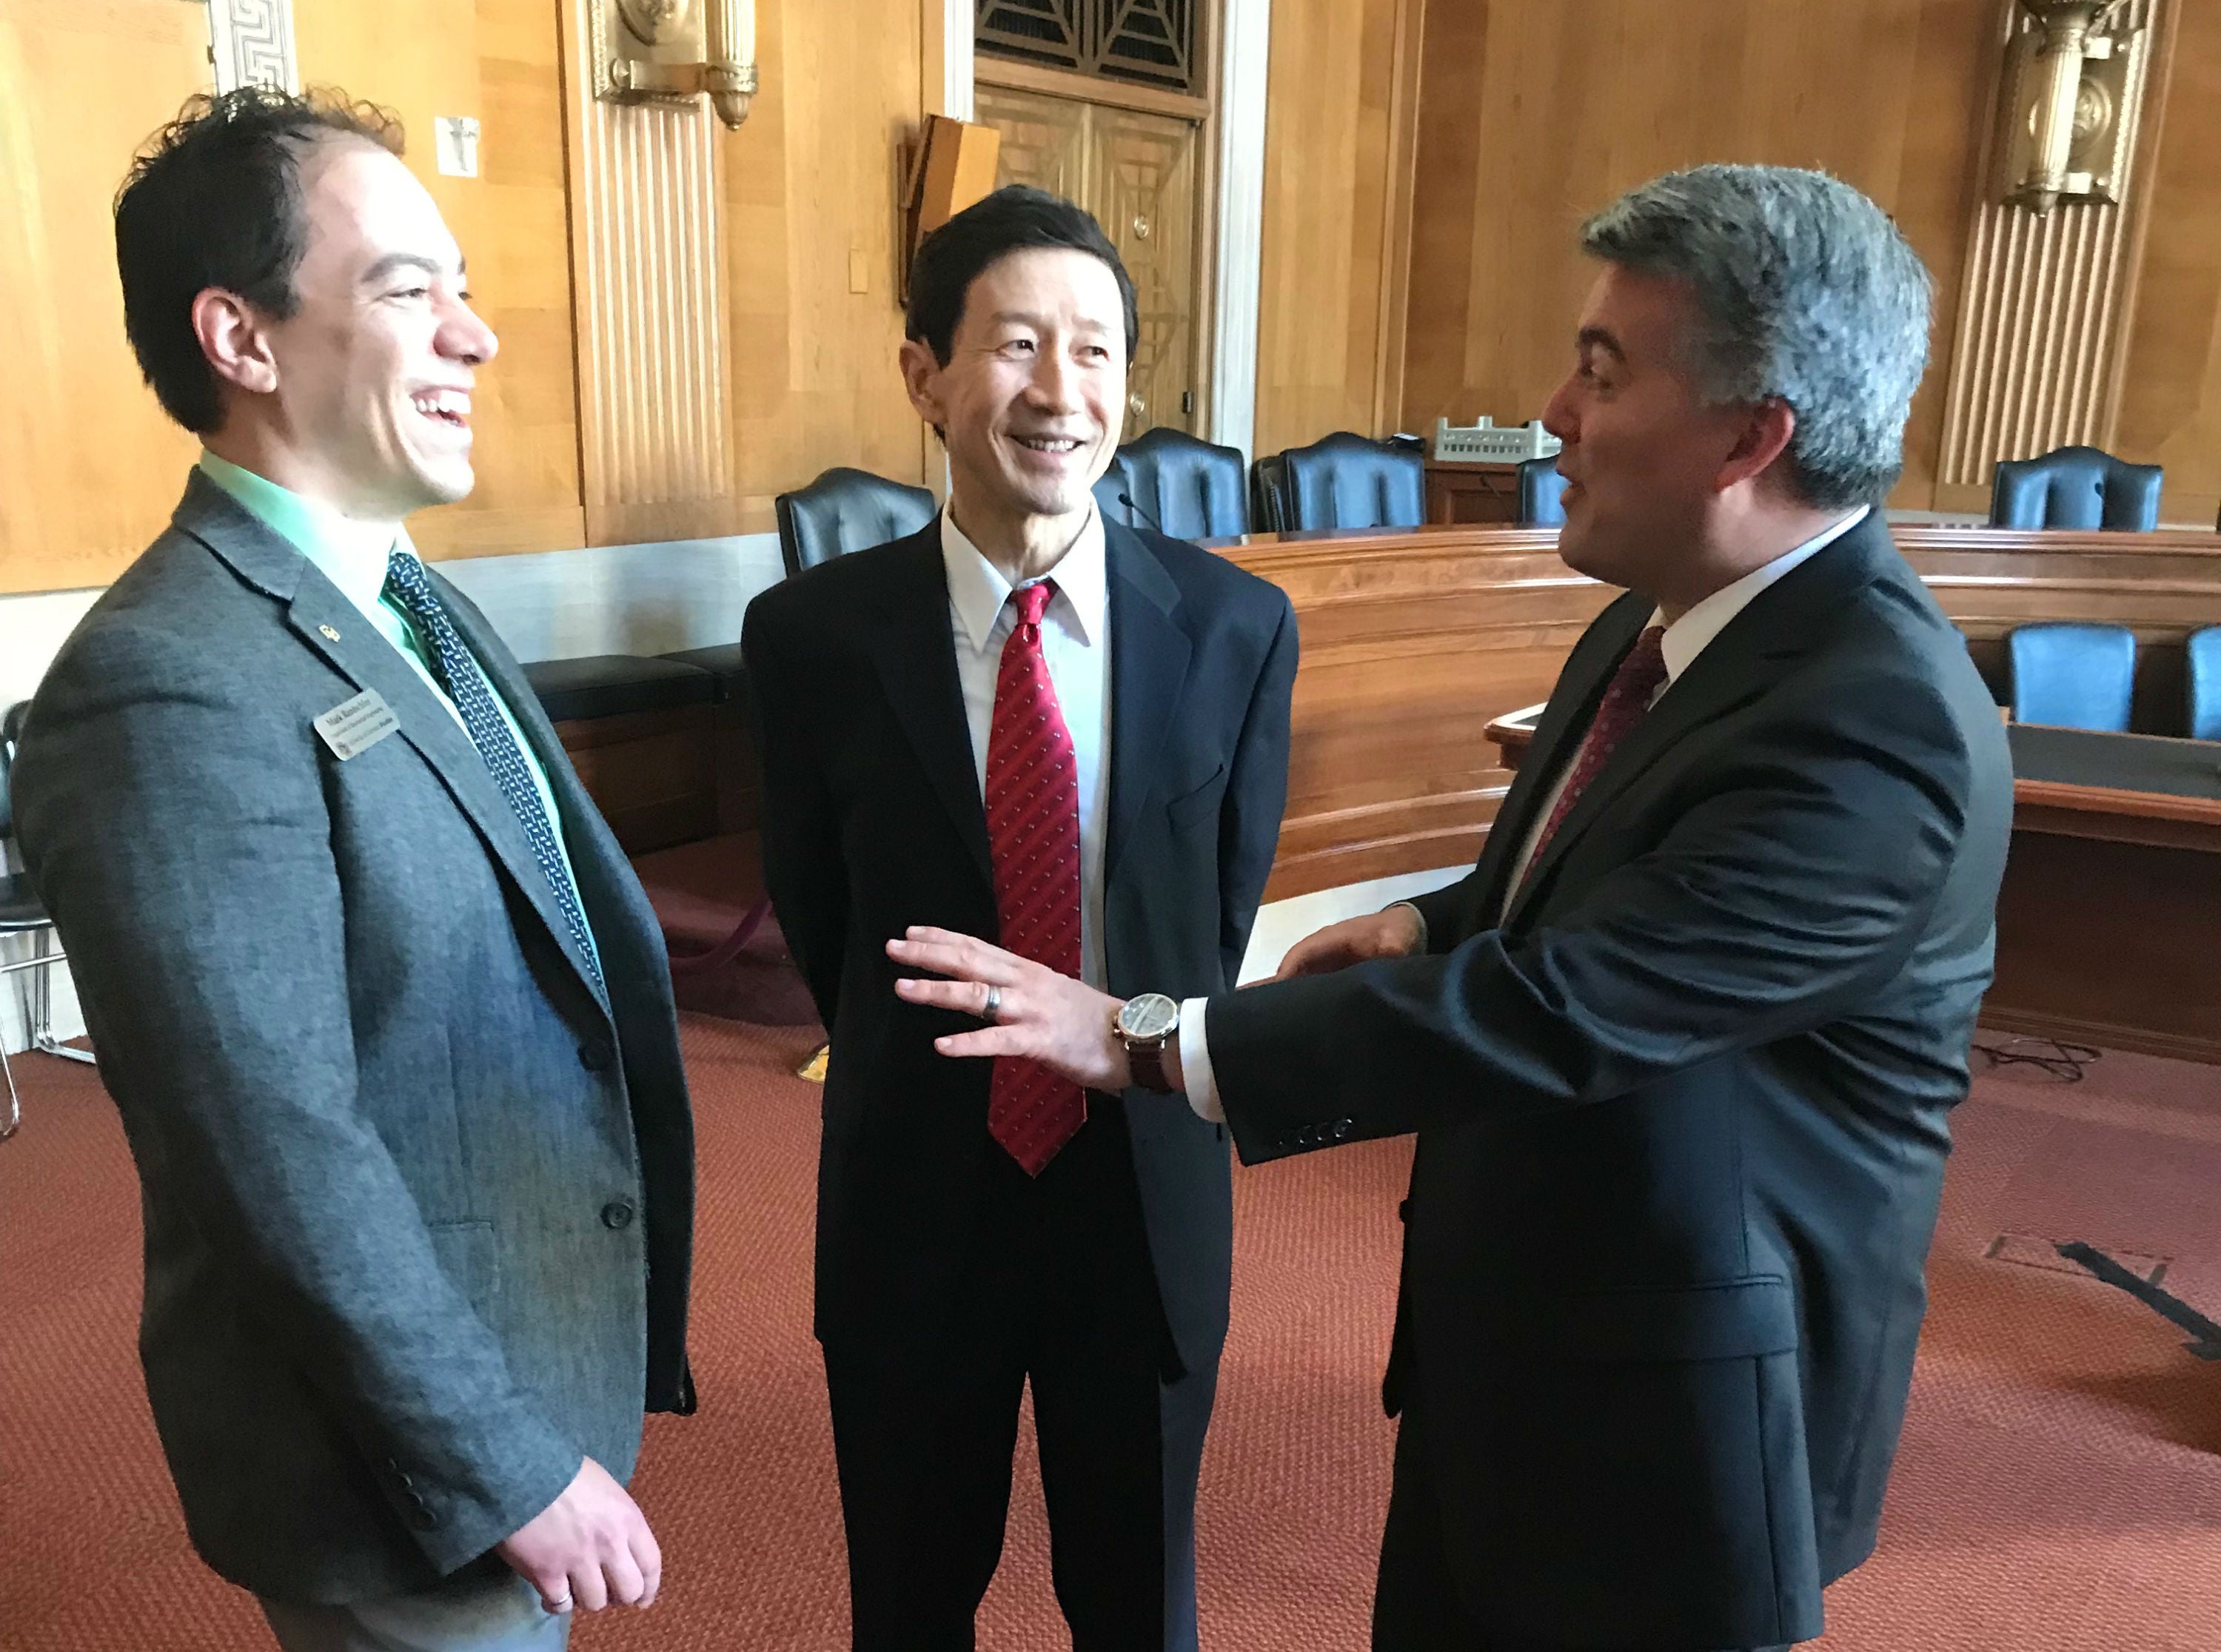 Mark Rentschler, Senator Cory Gardner, and Xinlin Li